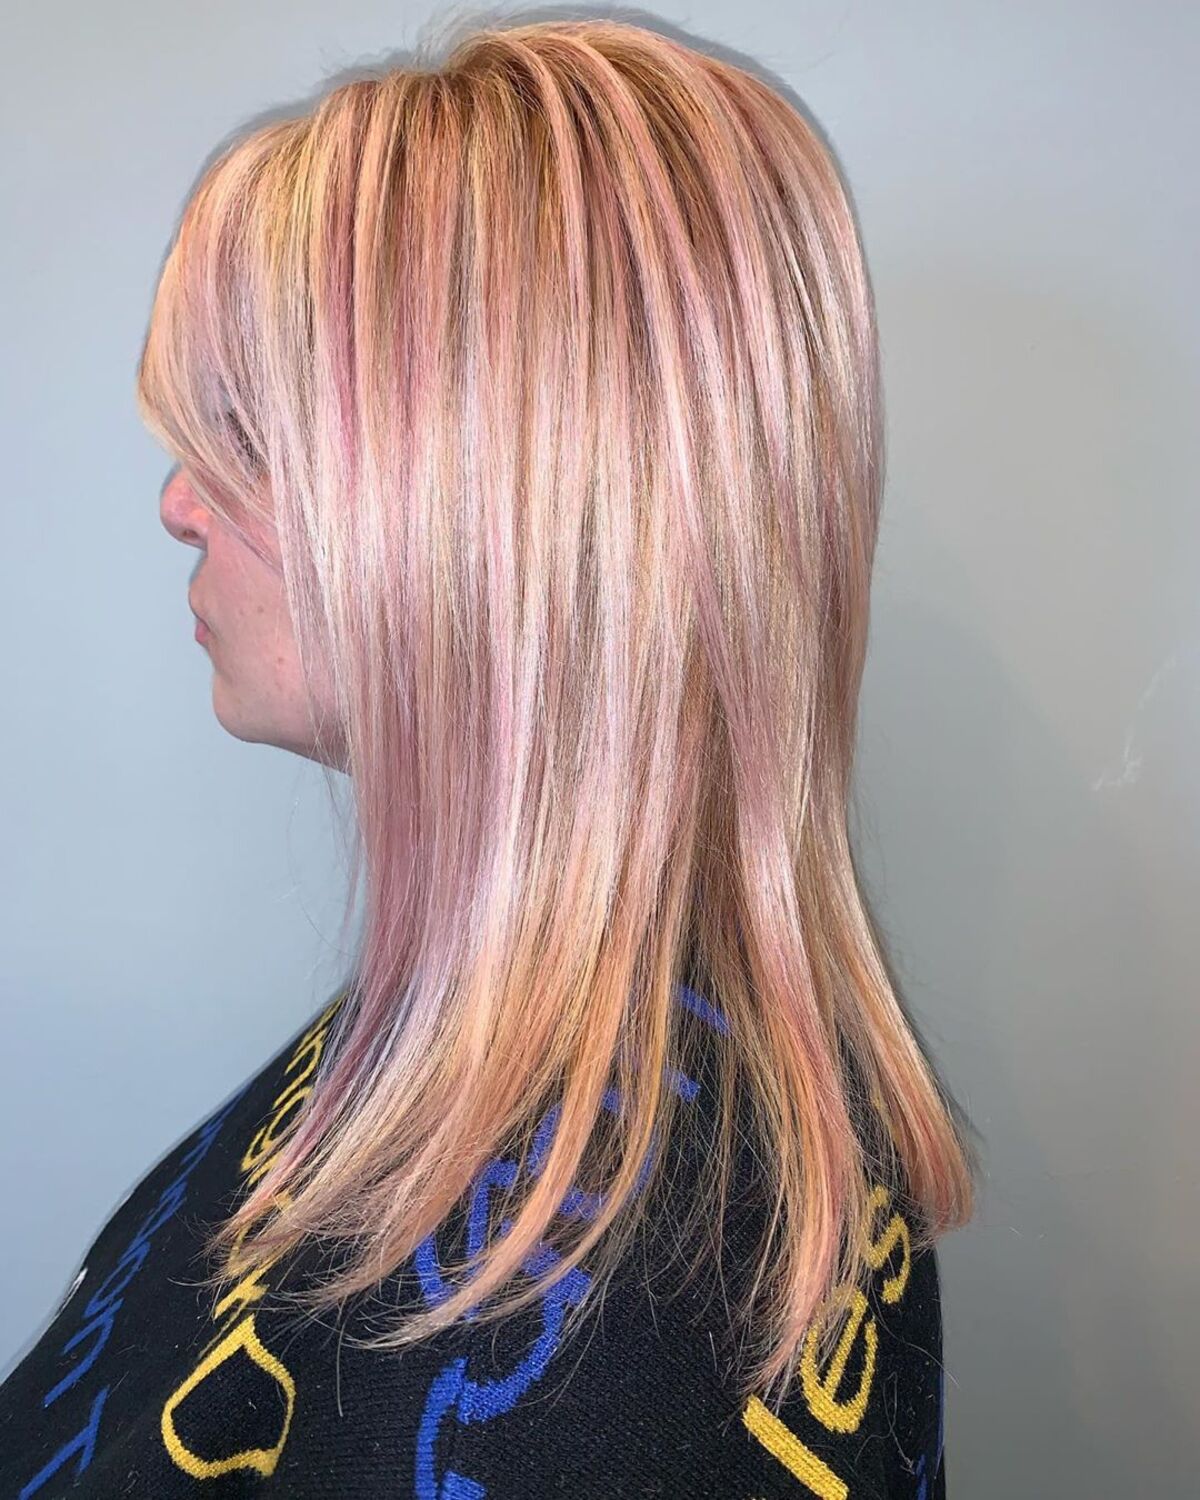 Rose Gold Highlights on Blonde Hair